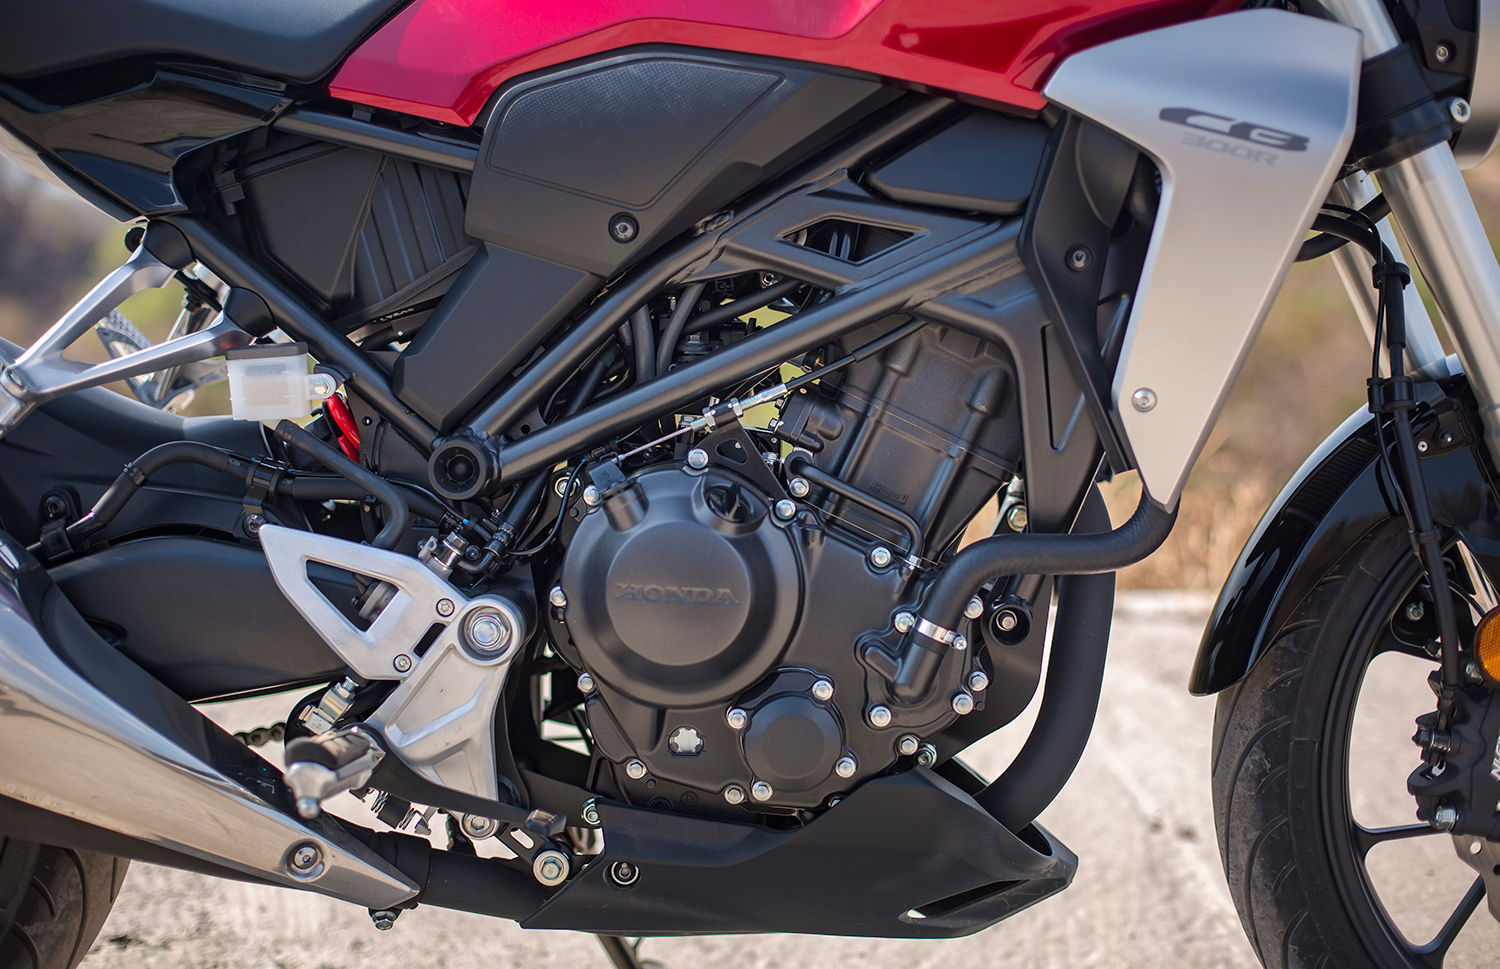 Honda CB300R: Pros, Cons And Should You Buy It? | BikeDekho